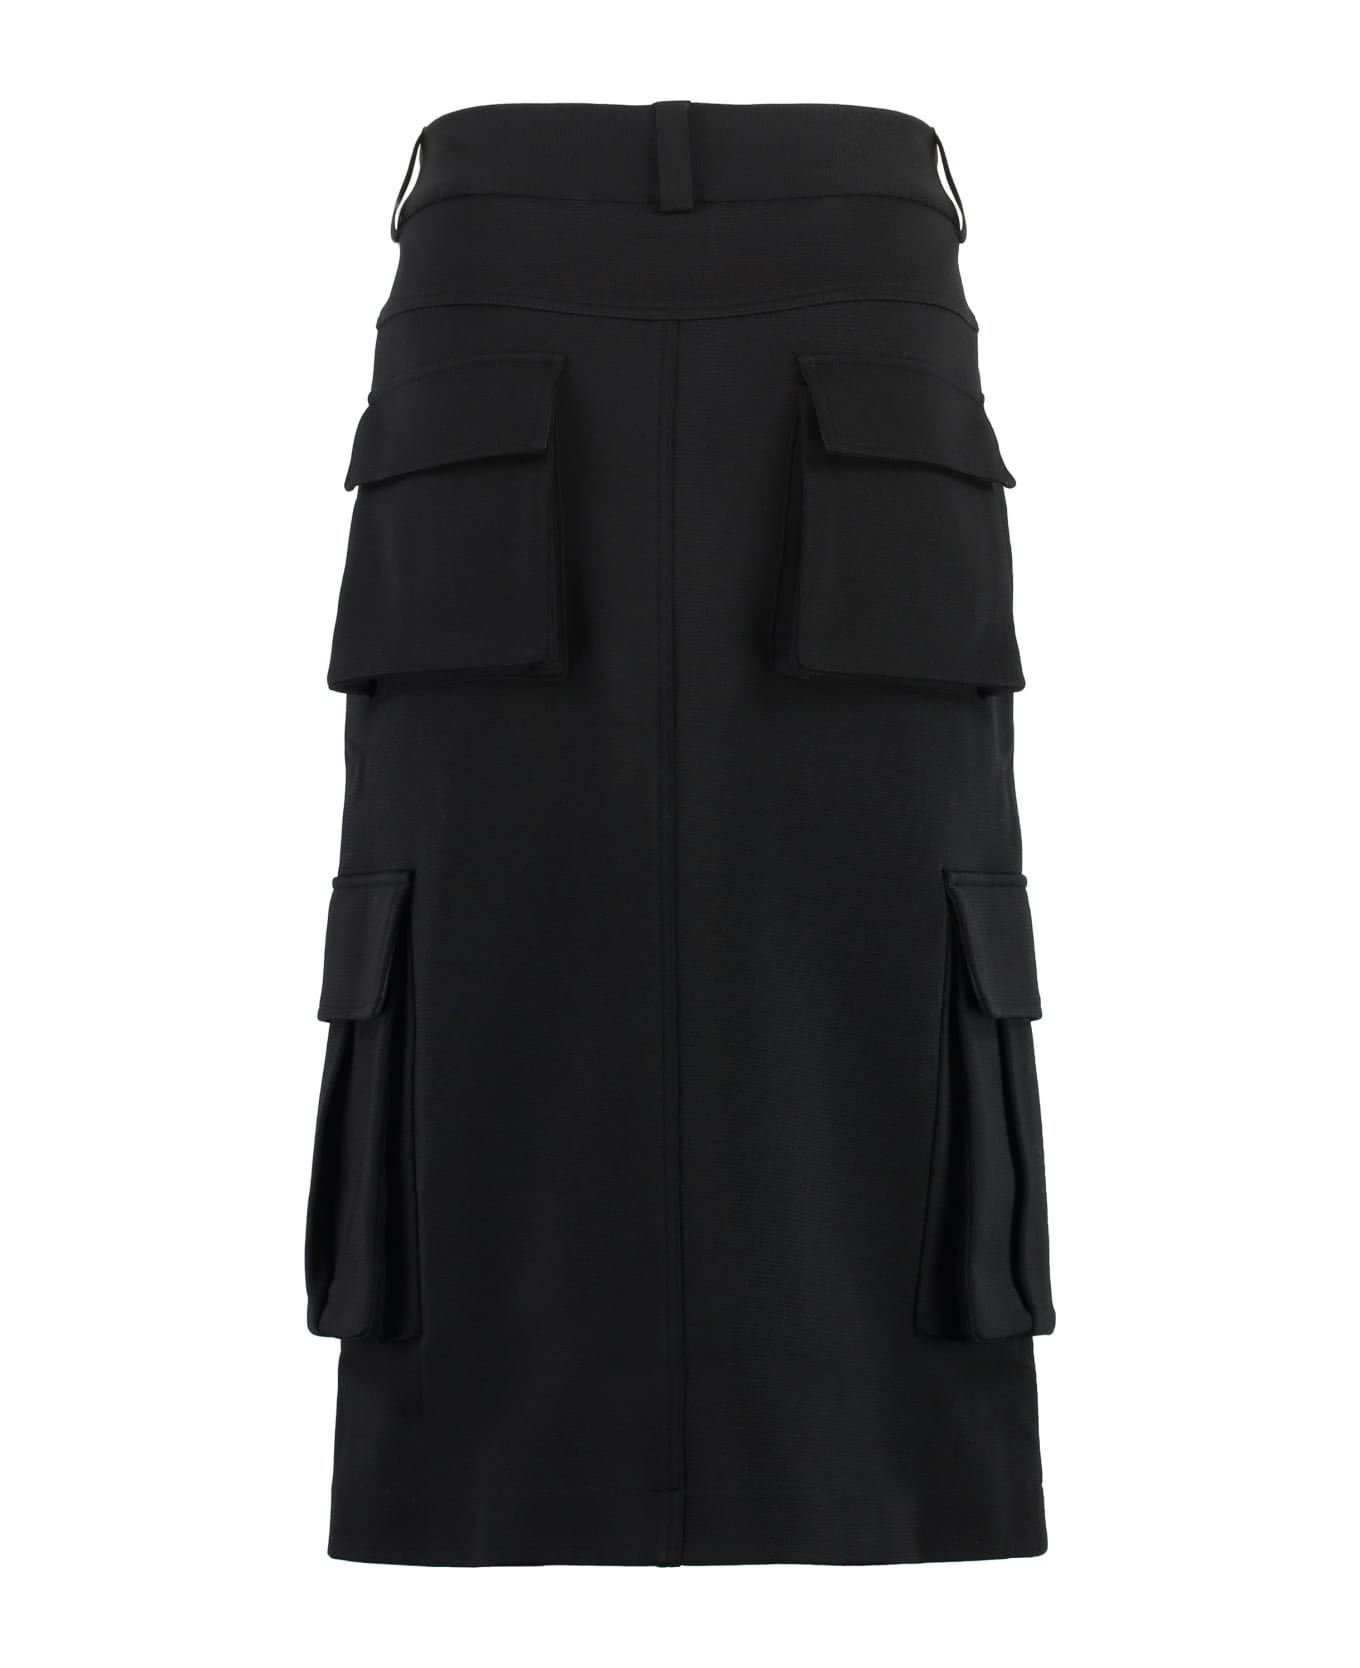 Givenchy Technical Fabric Skirt - black